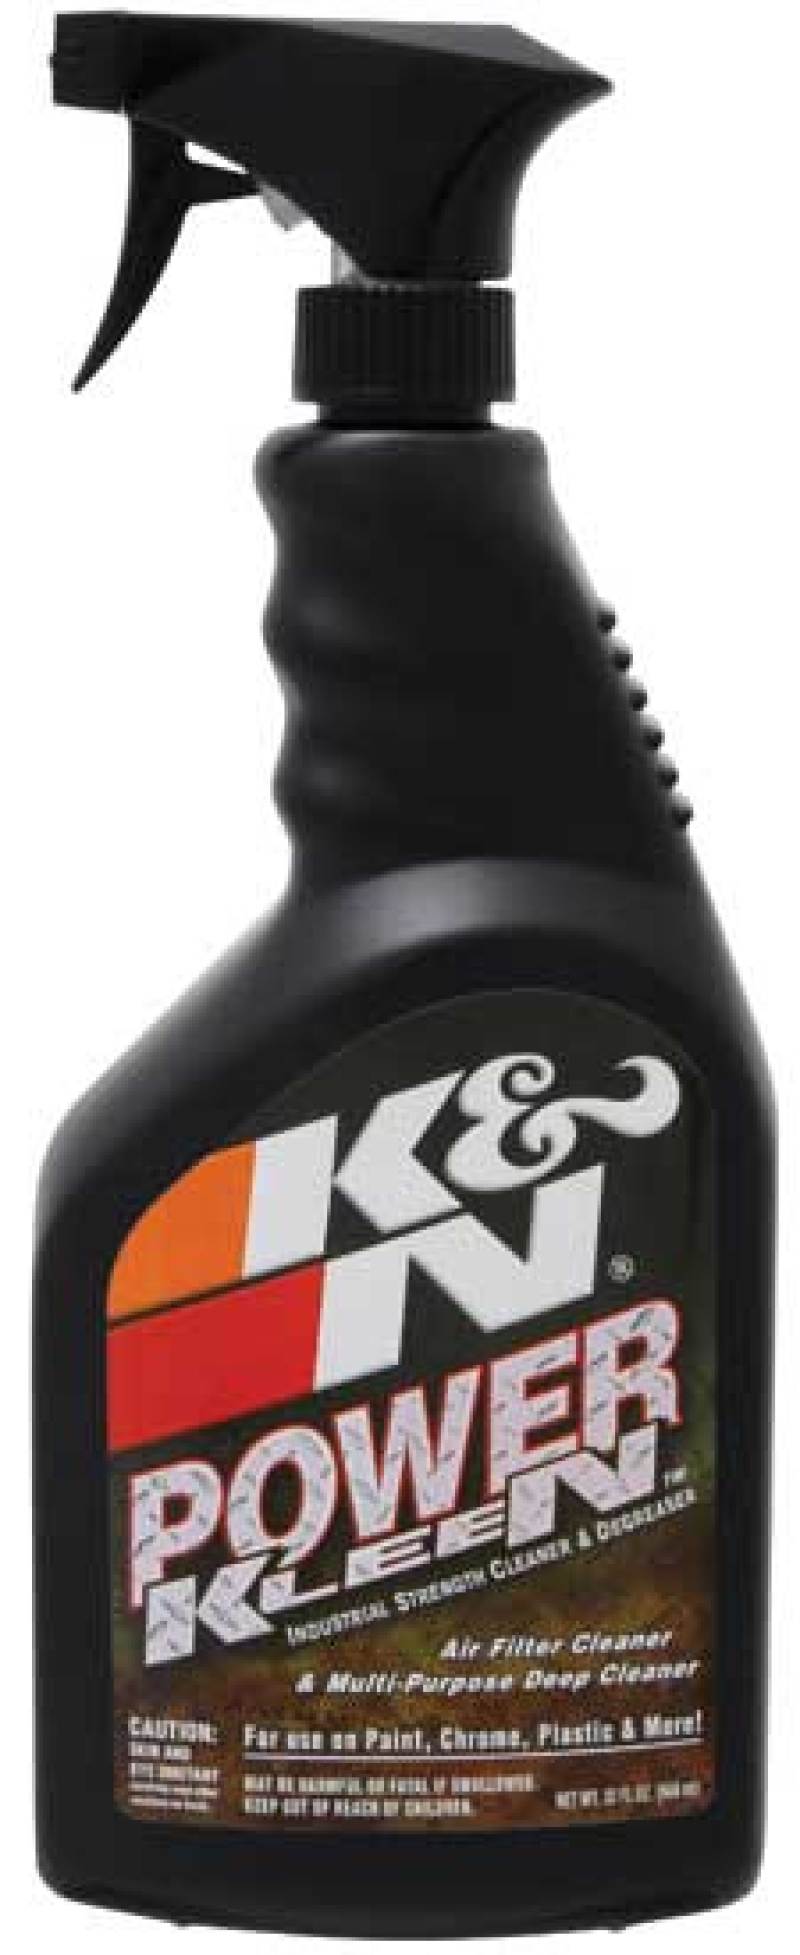 K&N Filter Care Service Kit - Squeeze 99-5050 - Advance Auto Parts